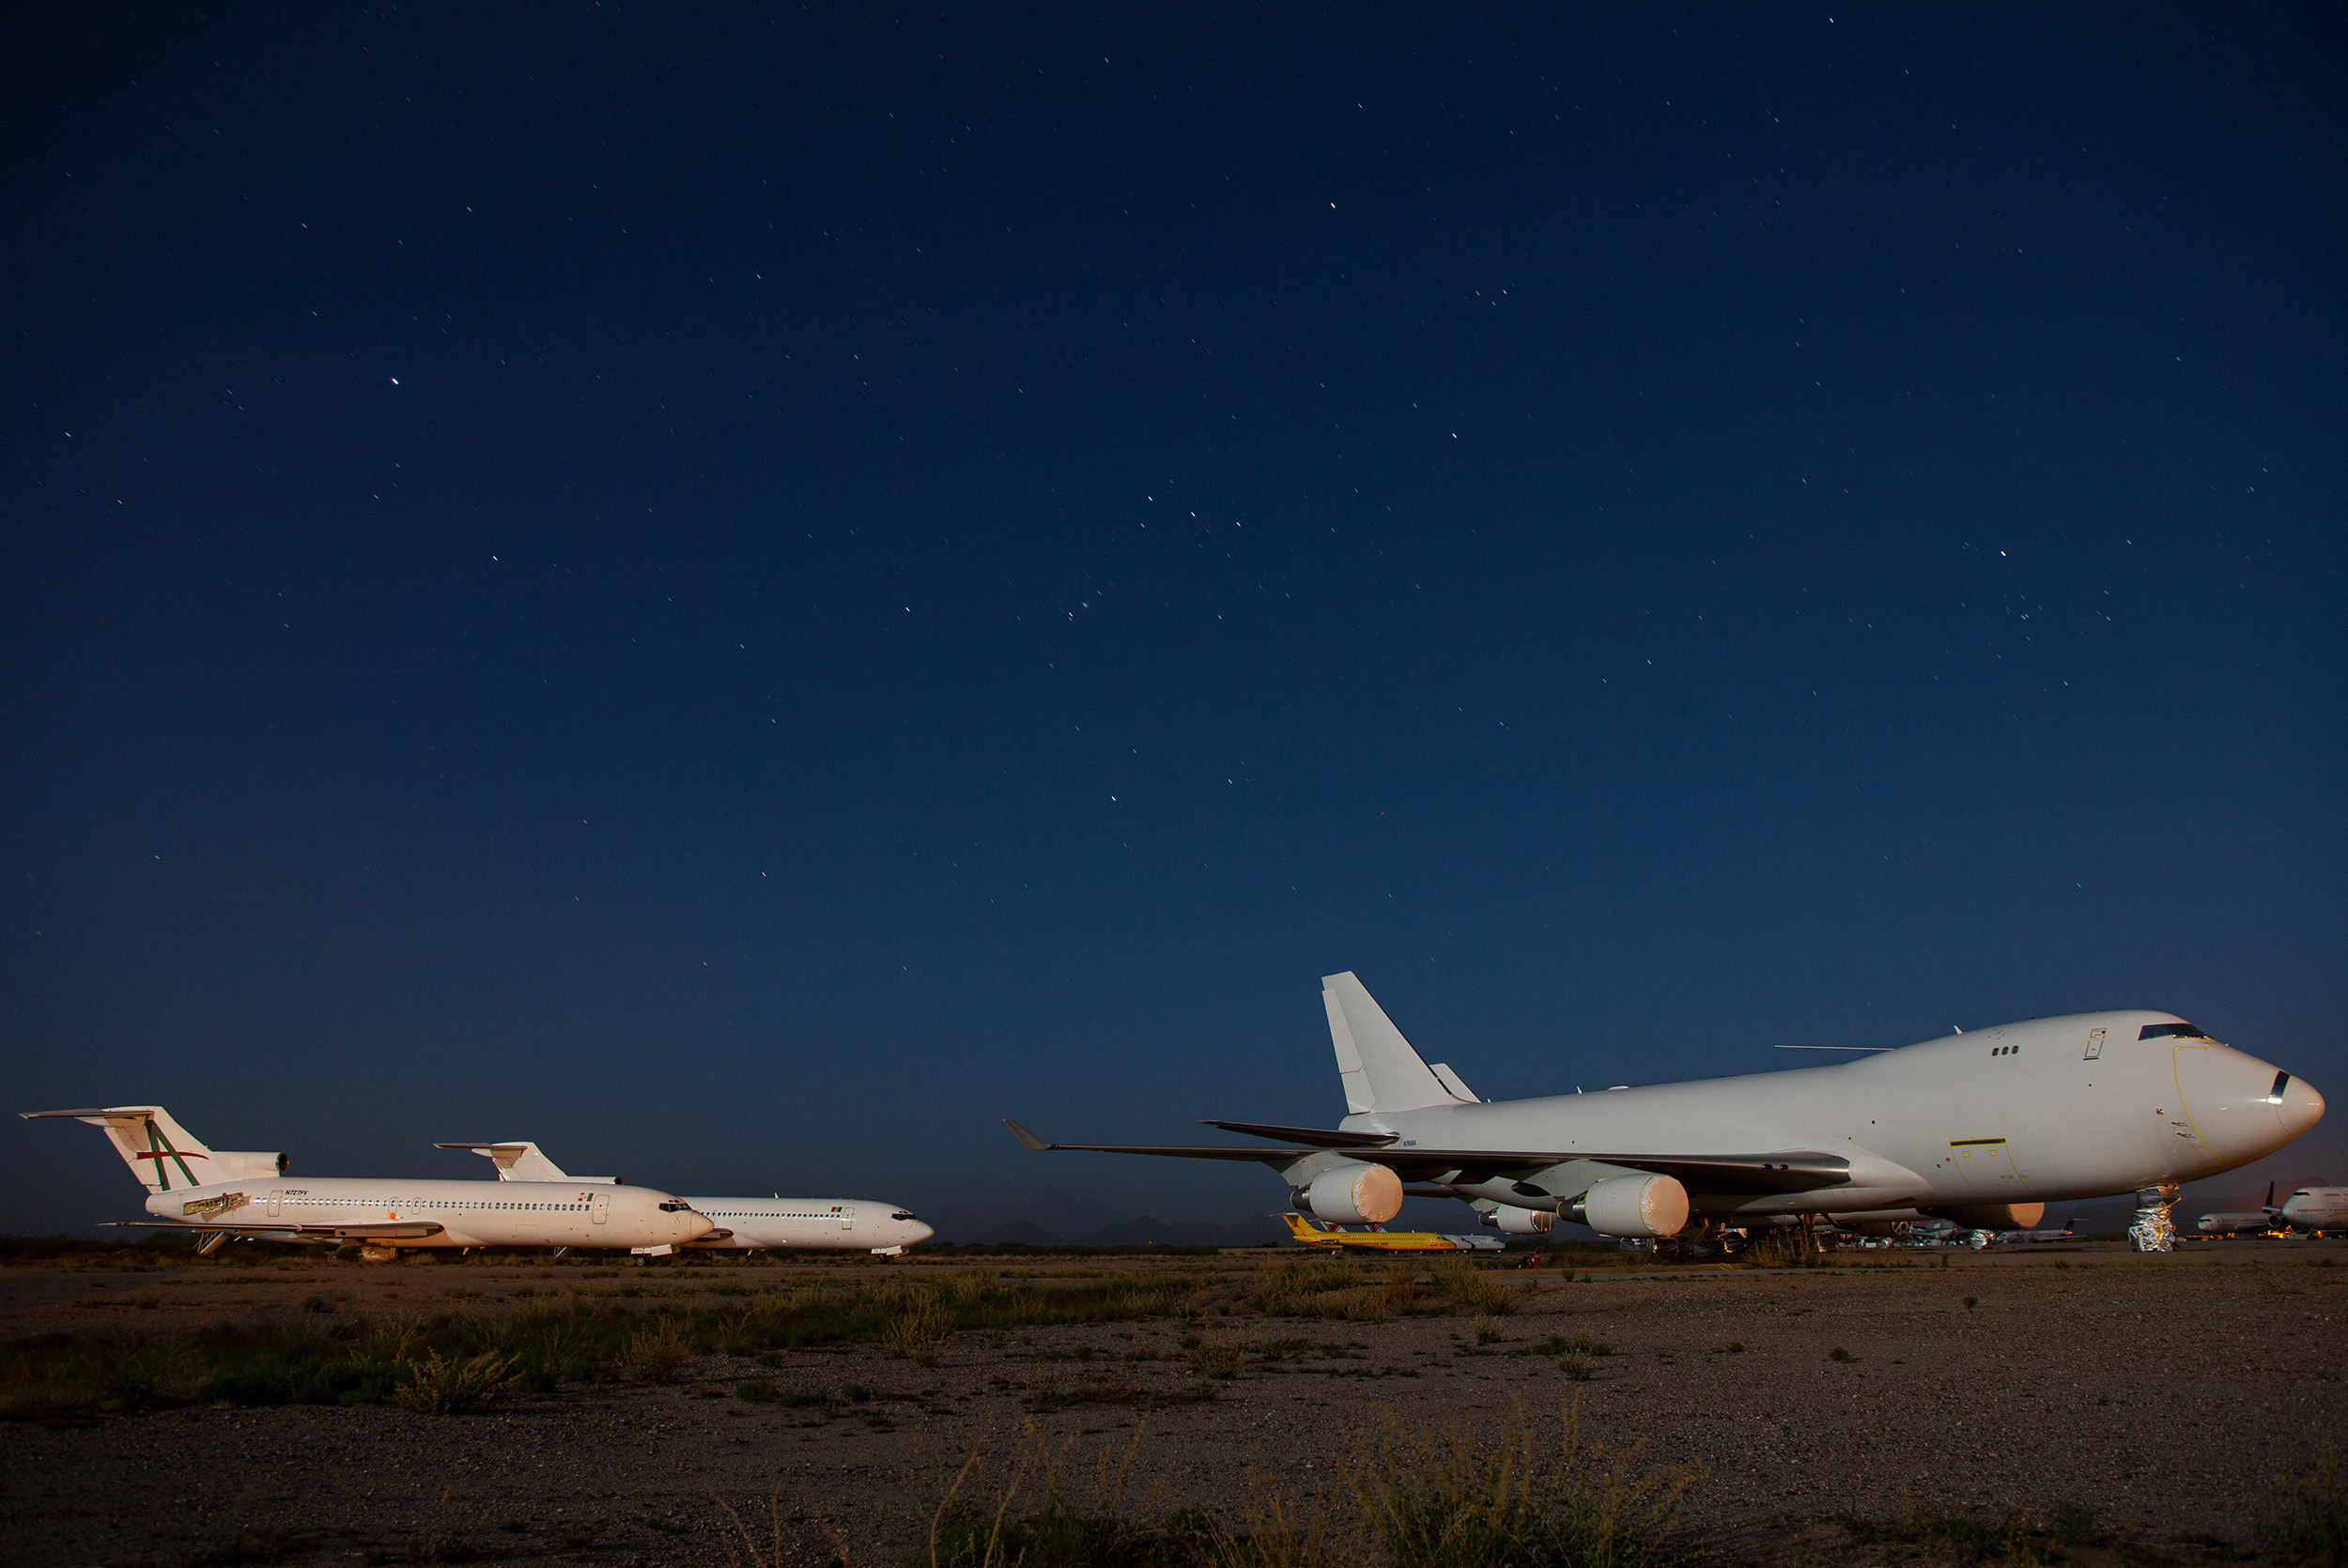 Airplanes at night - Steve Craft Photography - Phoenix Arizona Aviation Photographer